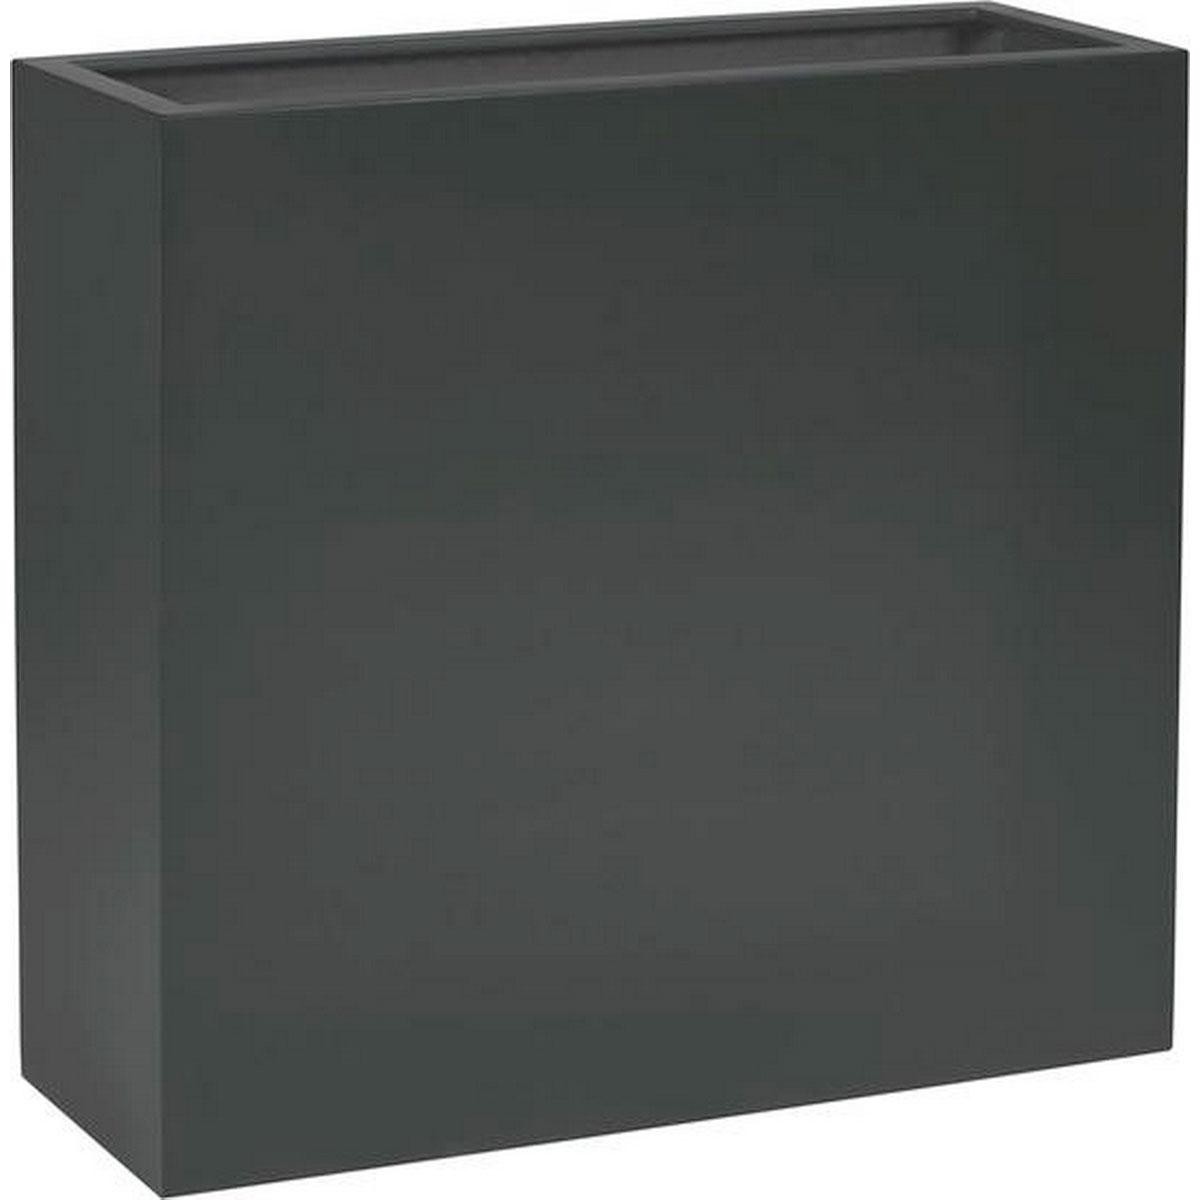 Solid room divider rectangular grp 2k coating dark grey 1